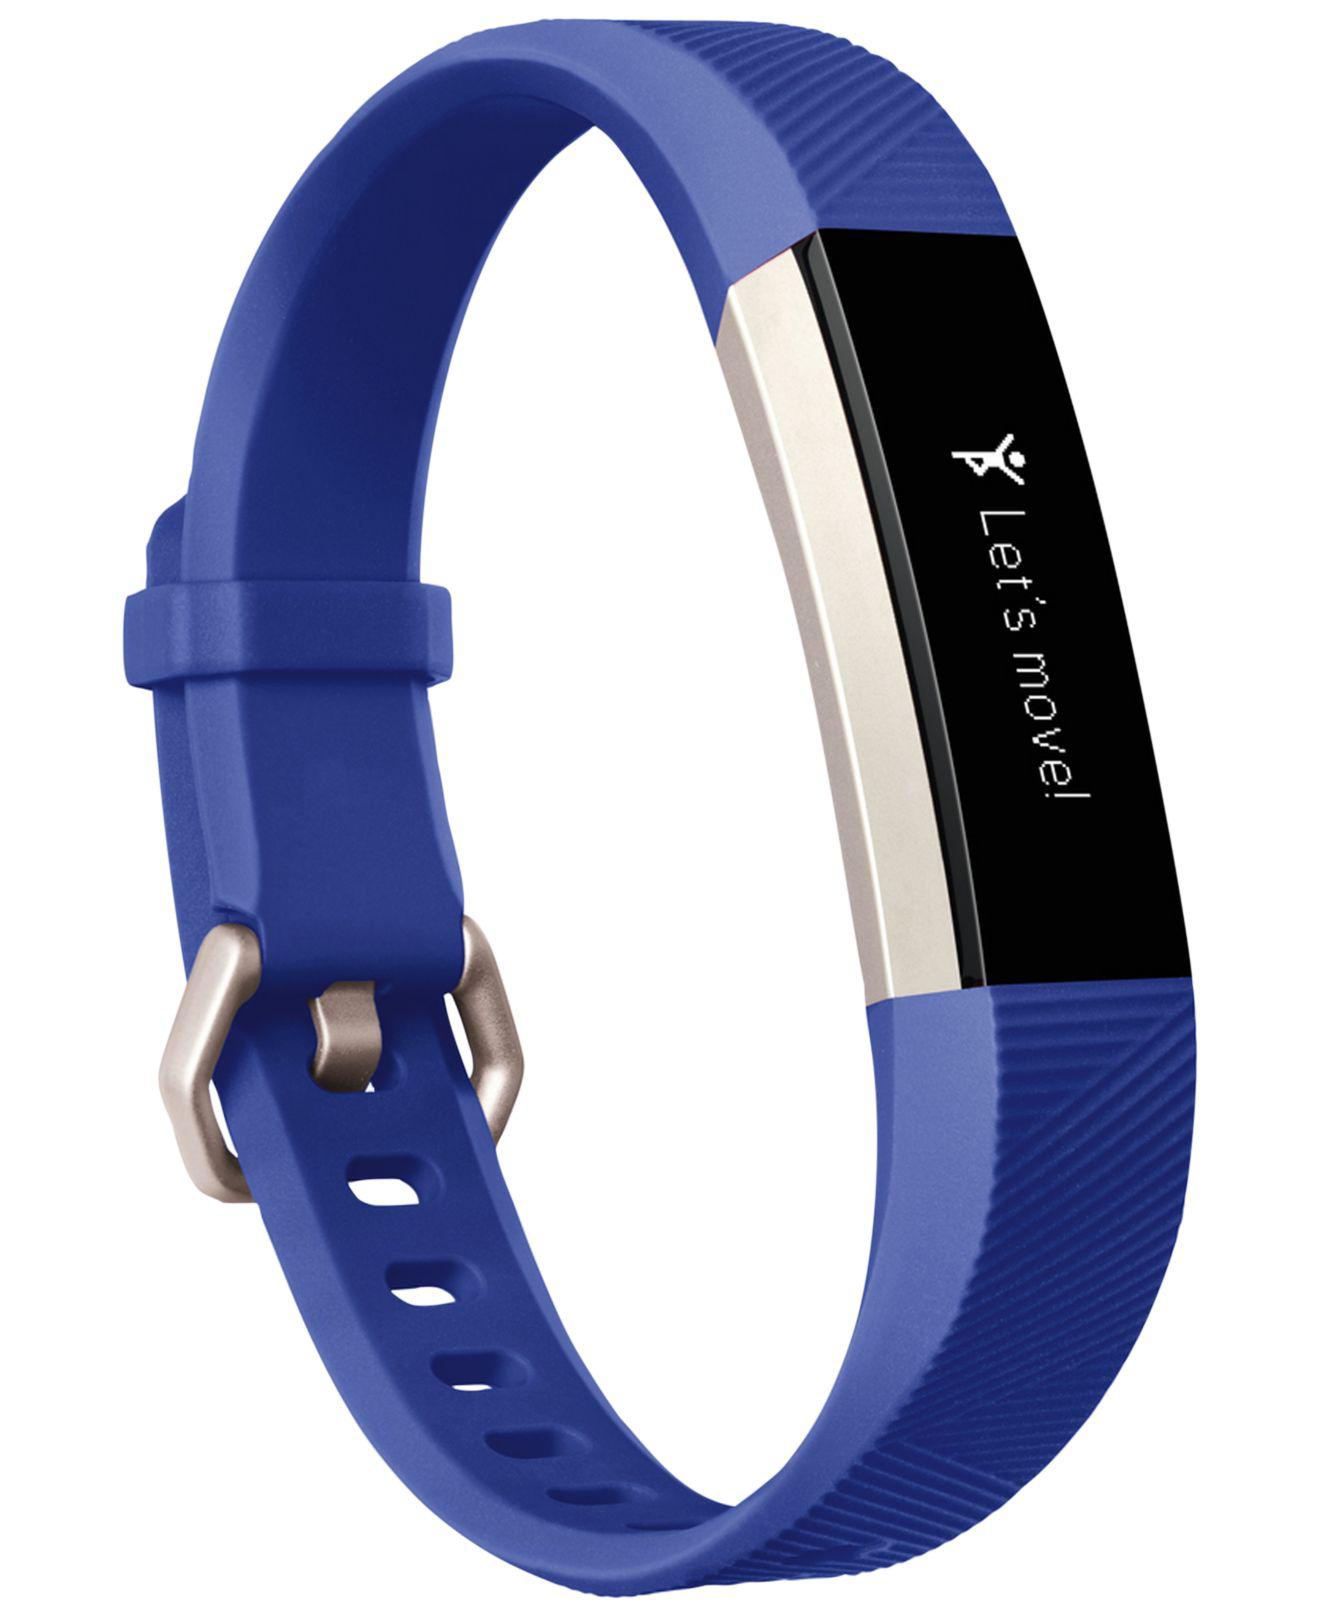 Fitbit Ace Power Purple & Electric Blue Elastomer Band Smart Watch - Lyst